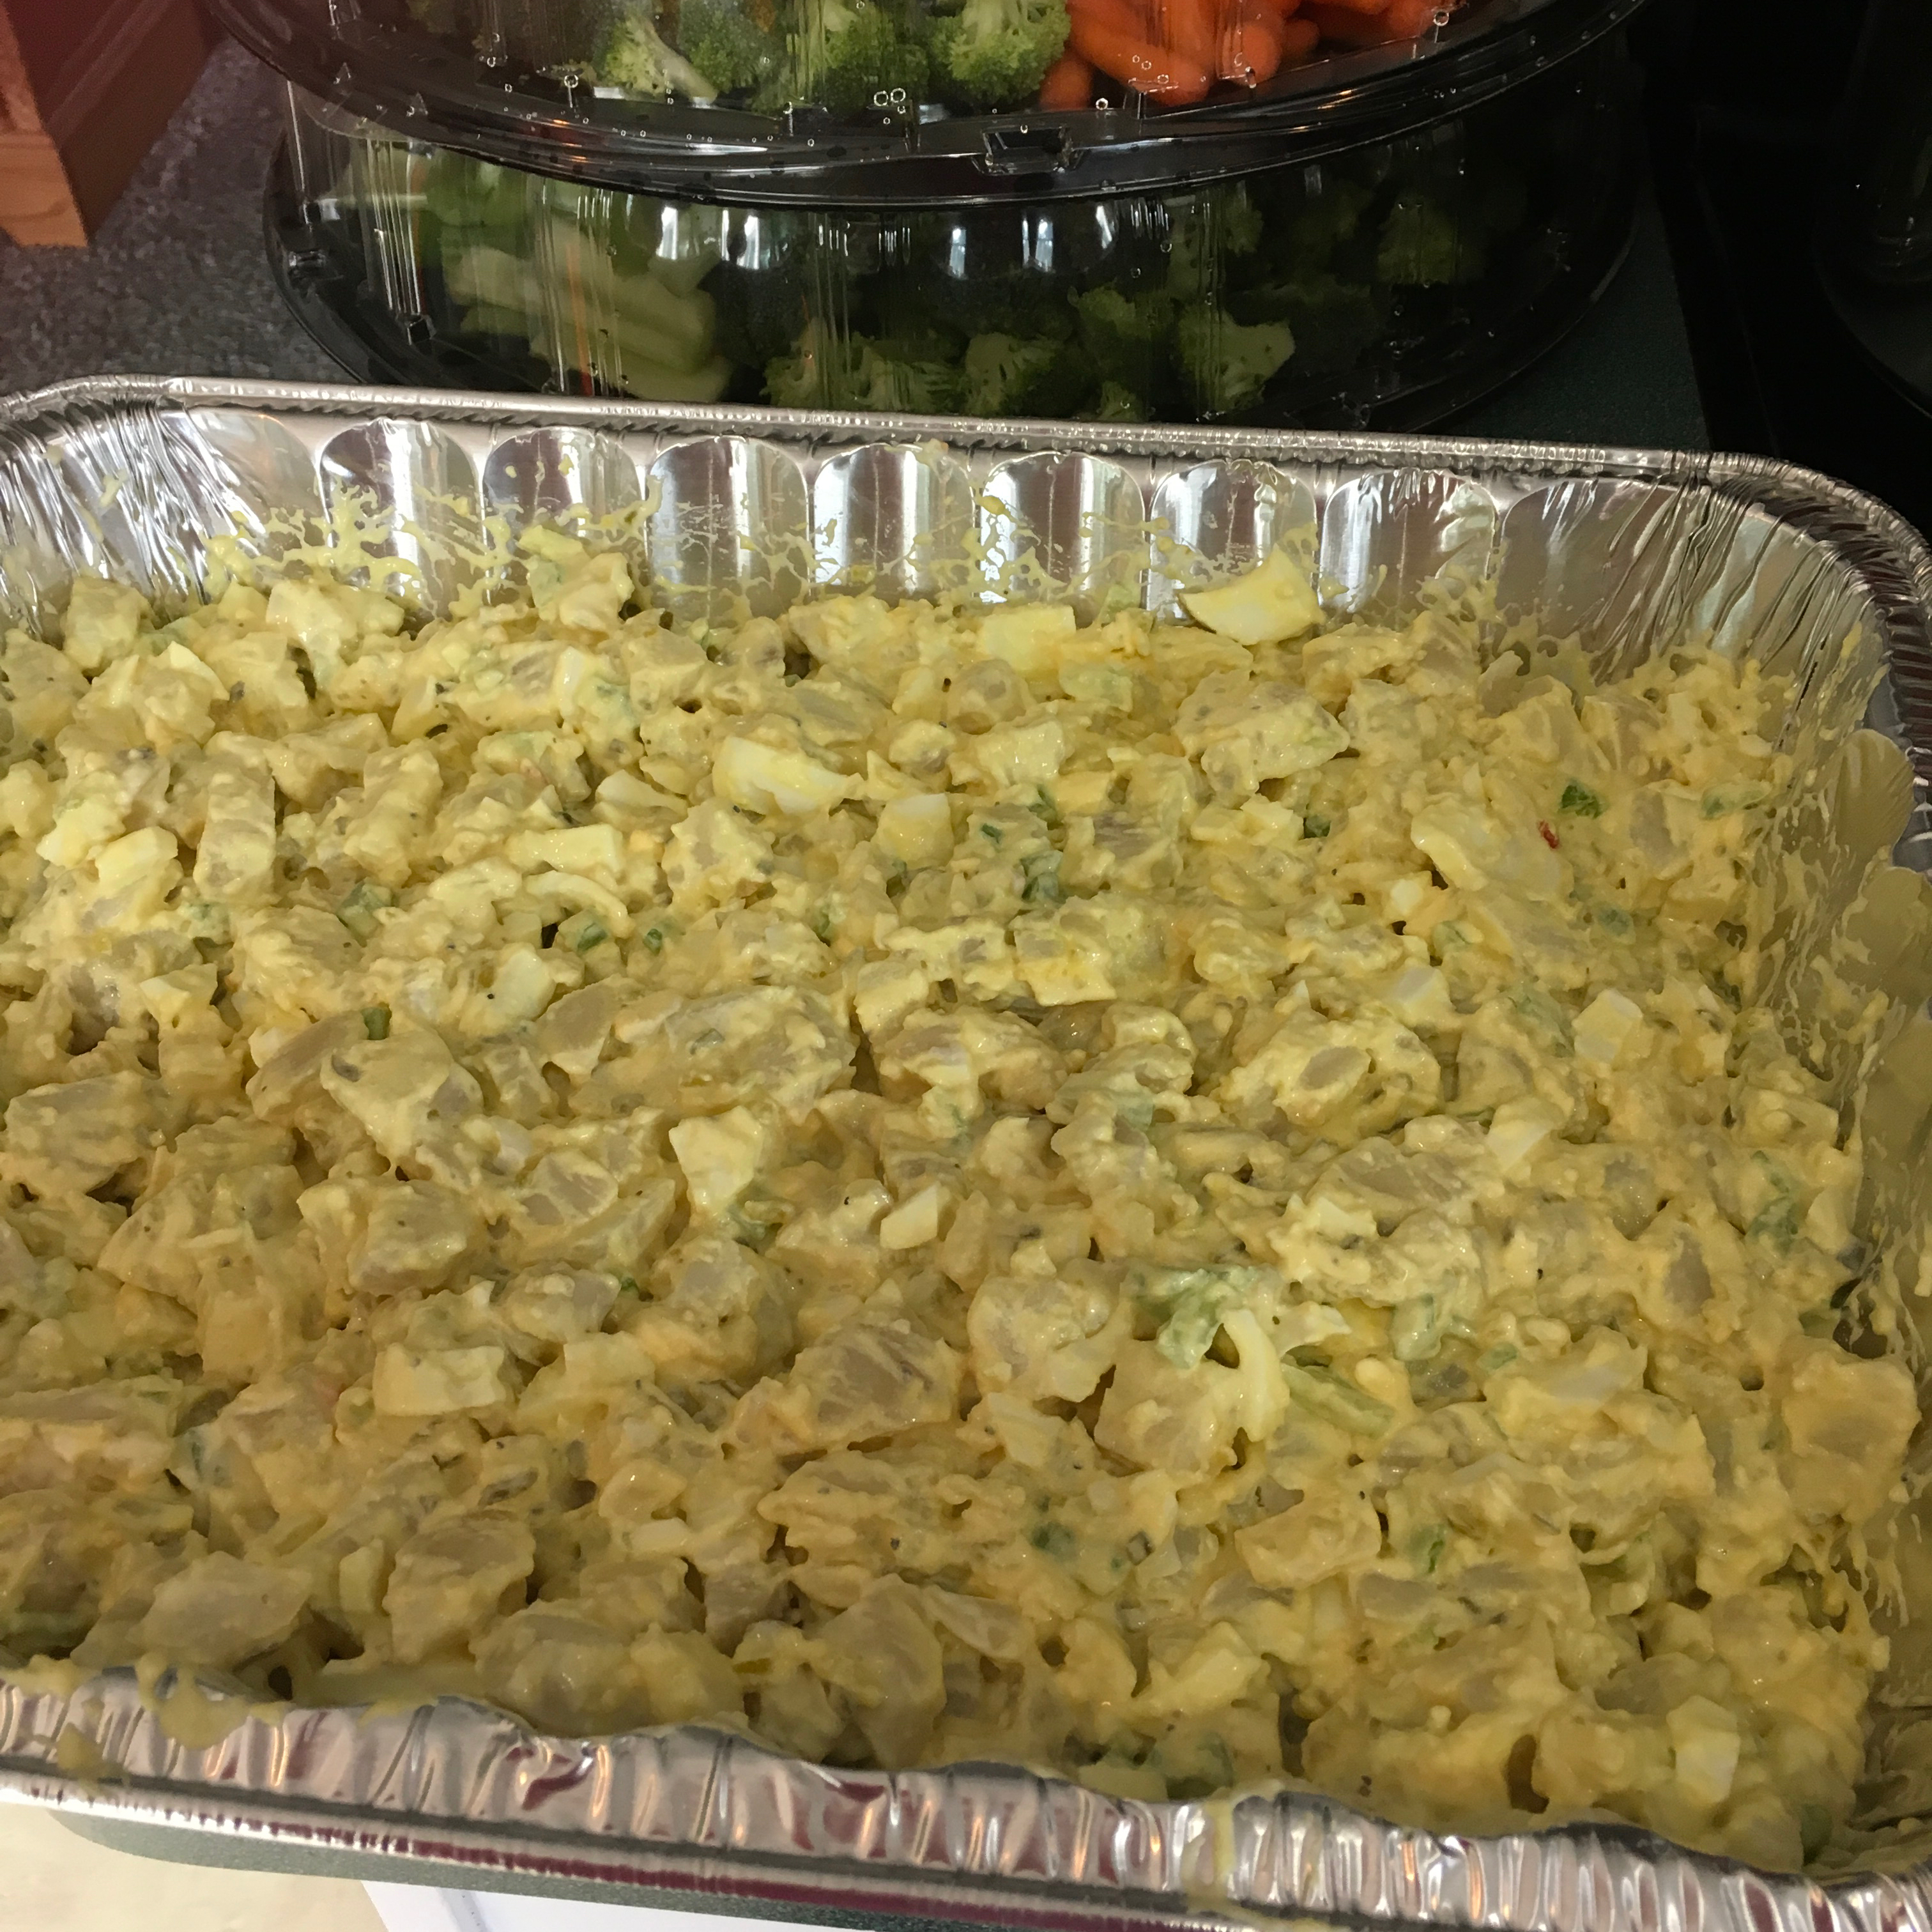 Southern Potato Salad 